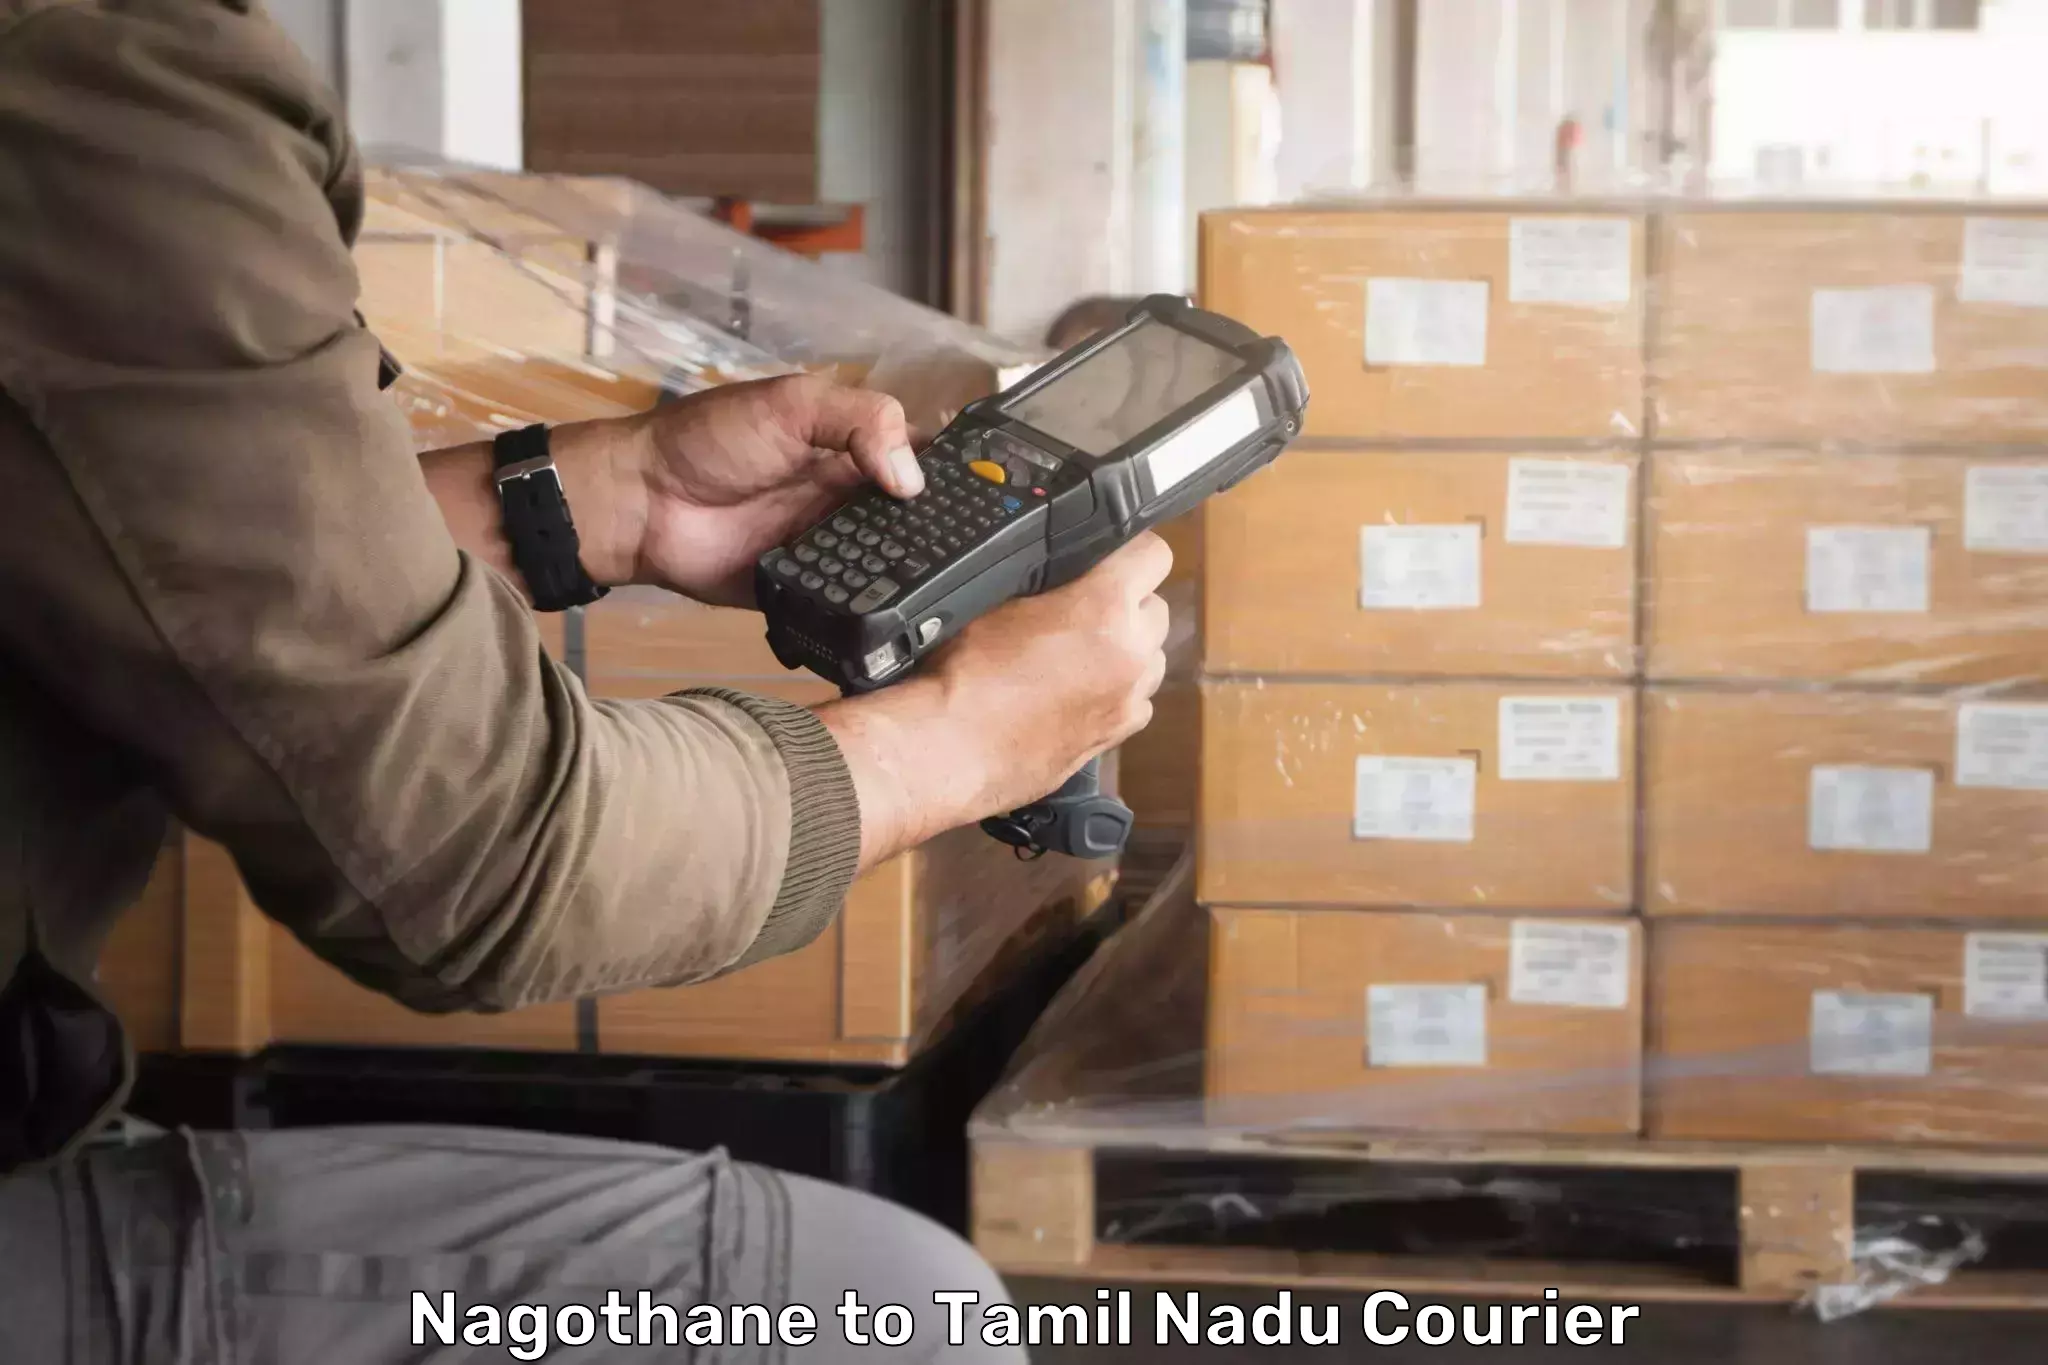 Global courier networks Nagothane to Gudiyattam